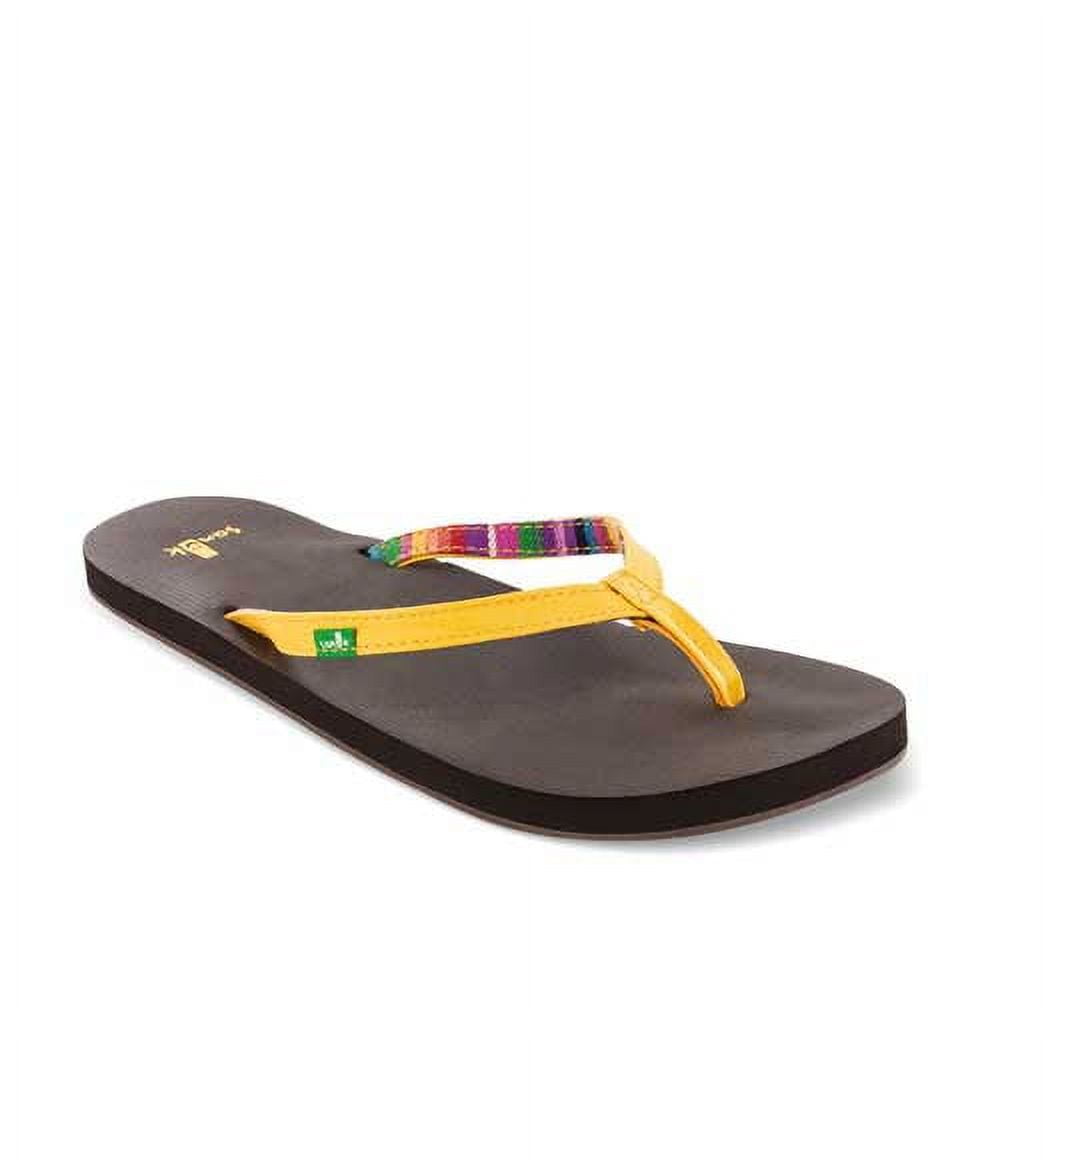 Sanuk Maritime Flip Flop Sandals - Women's 